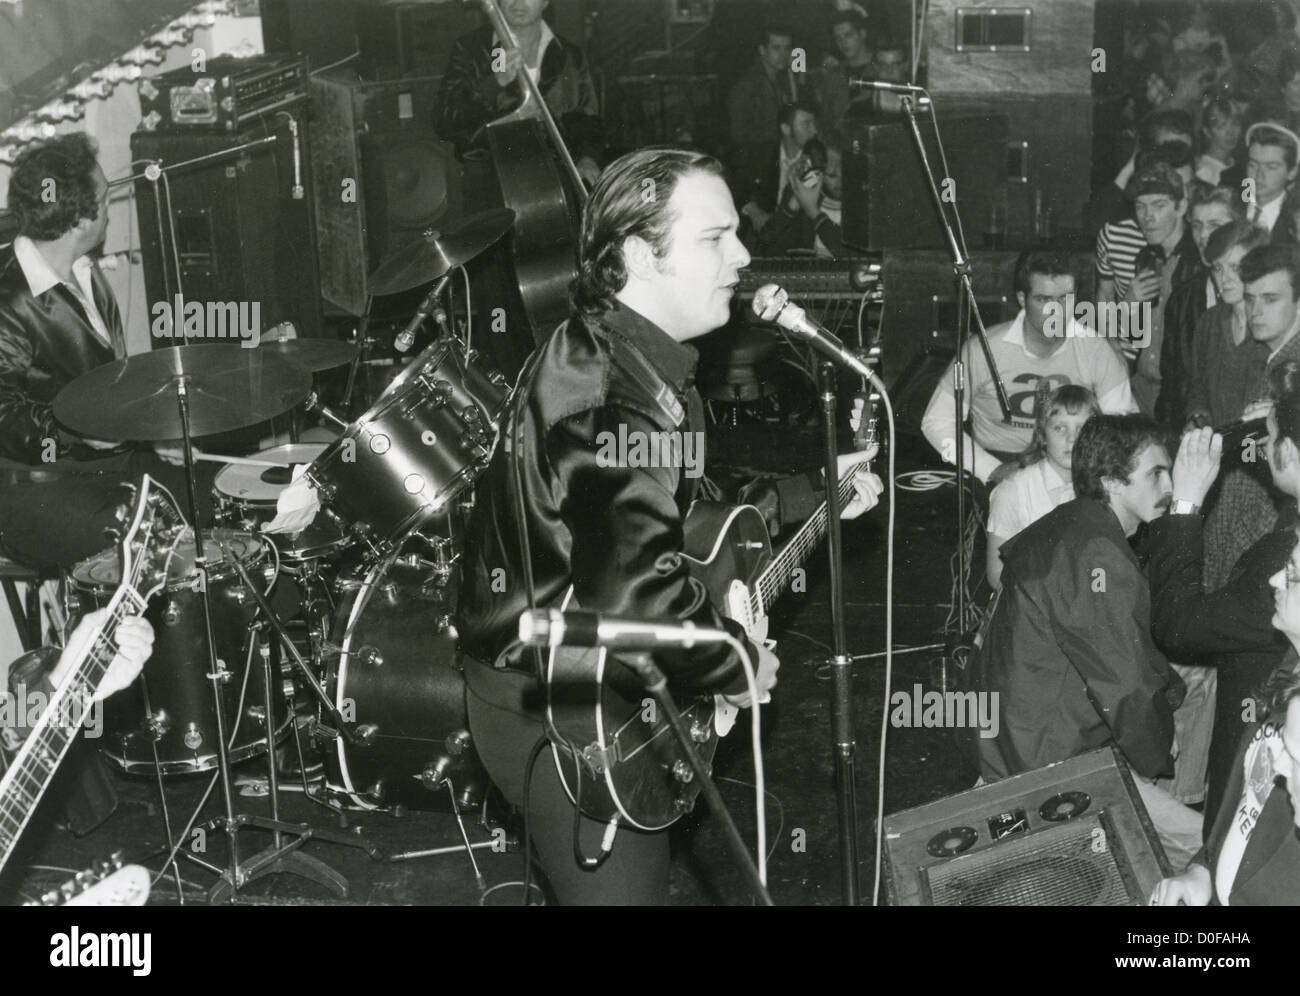 ROCKY BURNETTE US Rick 'n' Roll musicista bout 1982. Foto di Paul Harris Foto Stock